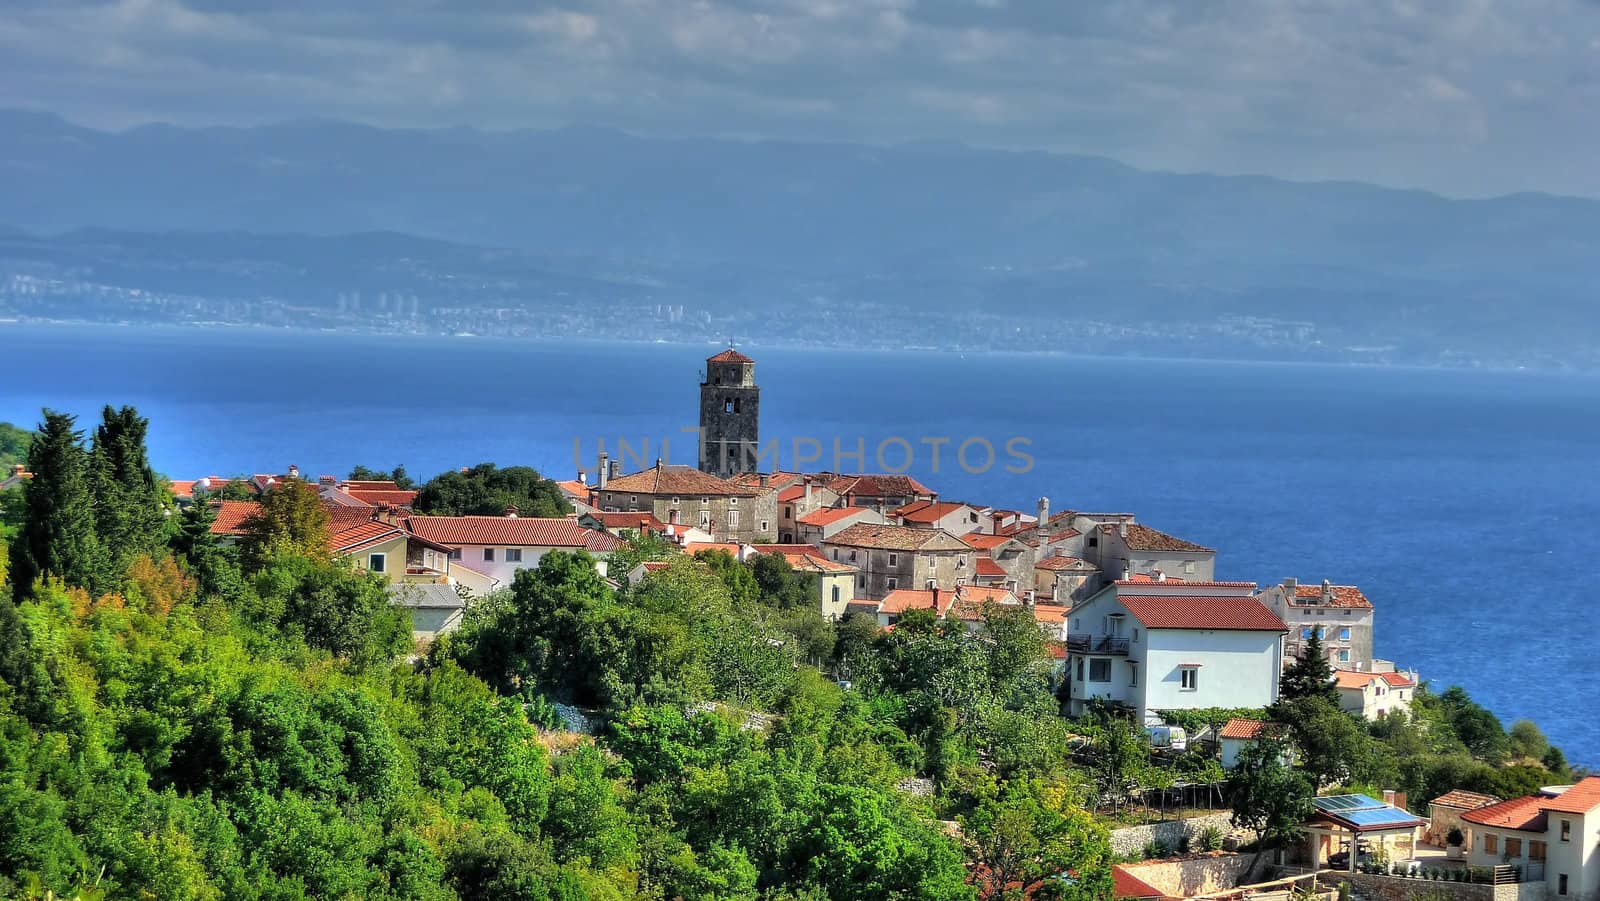 Adriatic Town of Brsec and Kvarner bay, Croatia